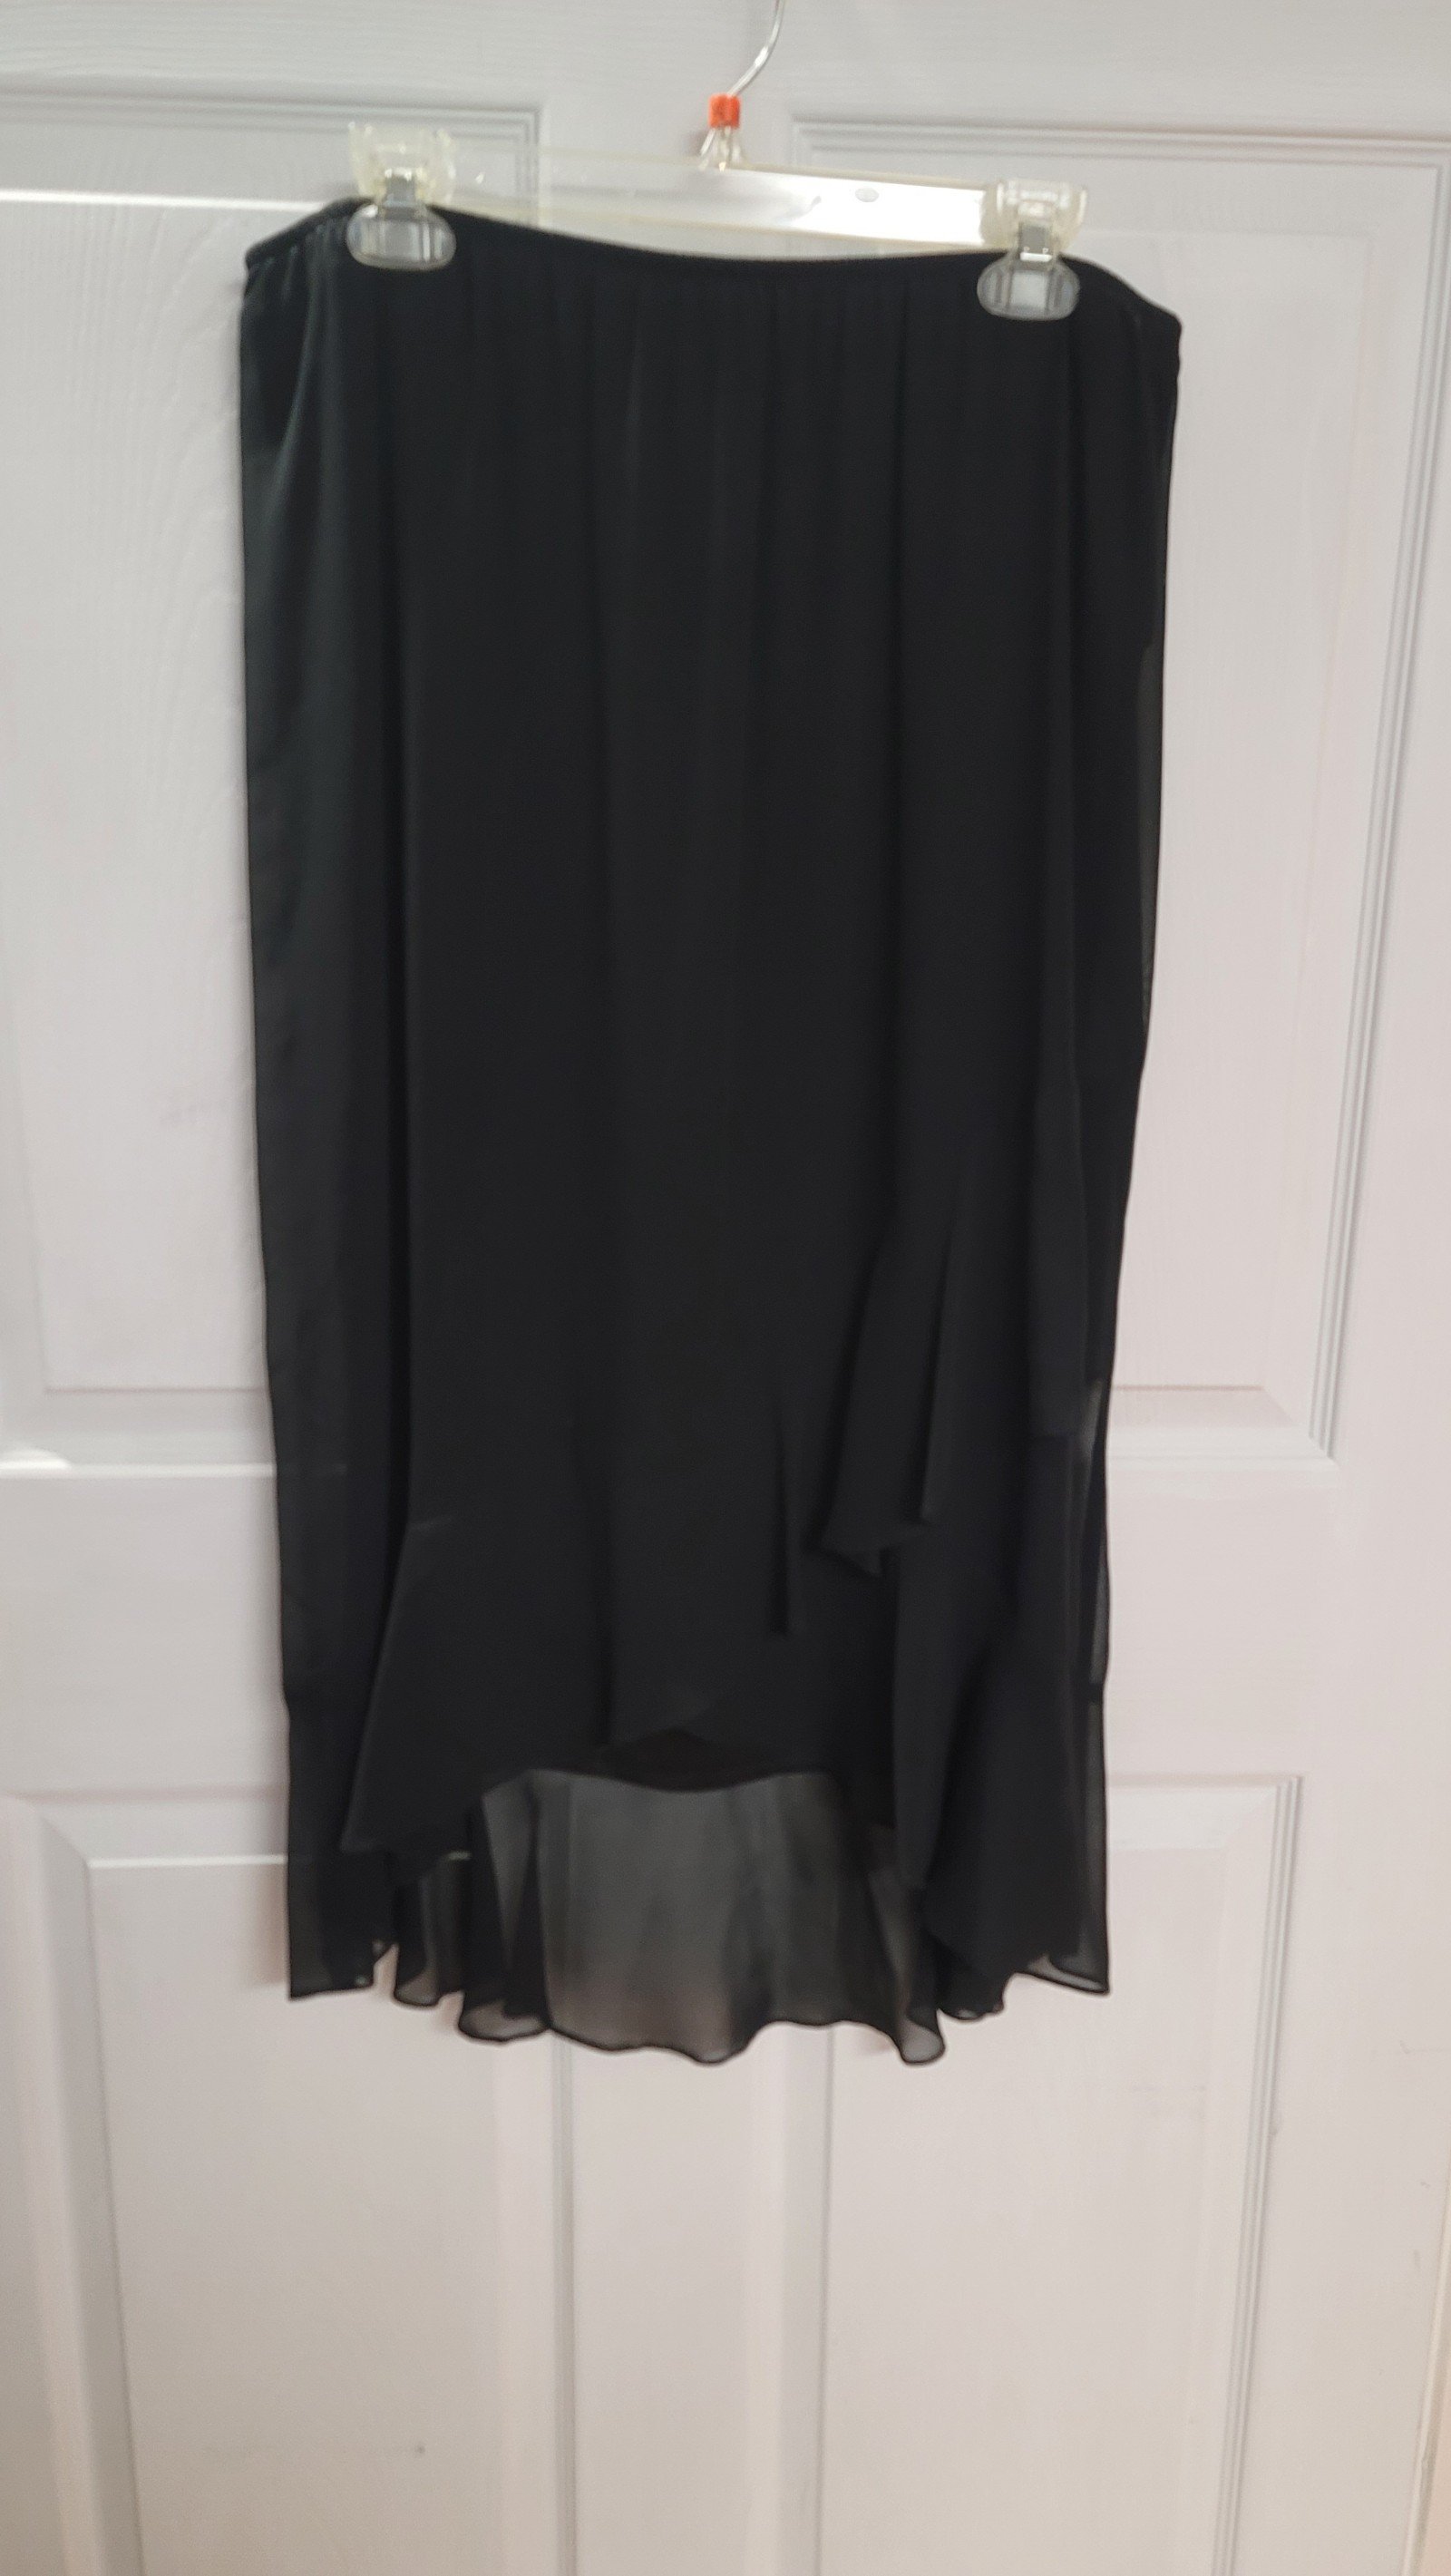 Affordable Womens Dressy Black Skirt oHU526zkb Outlet Store